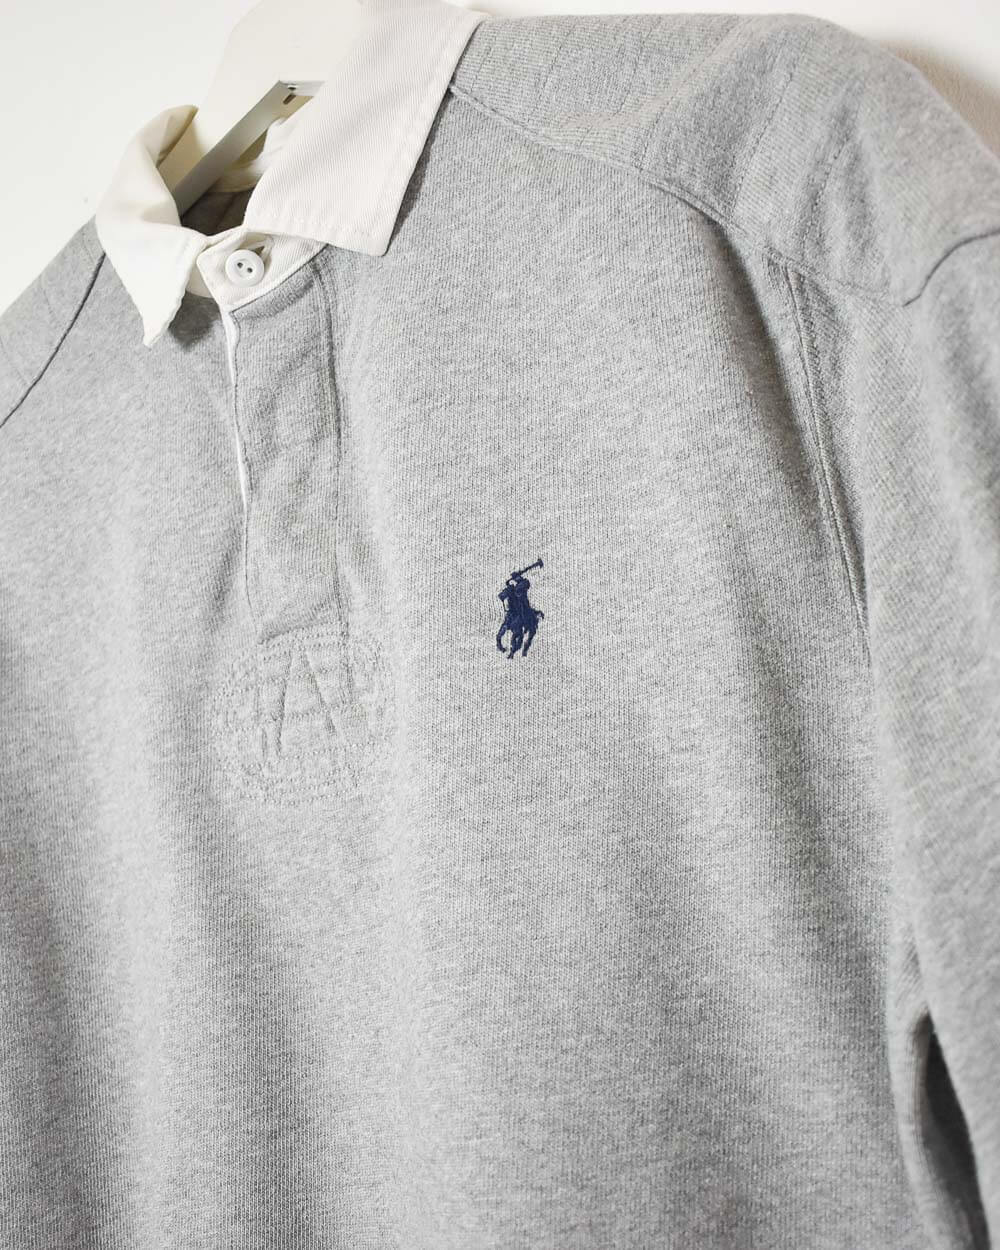 Stone Ralph Lauren Rugby Shirt - Medium